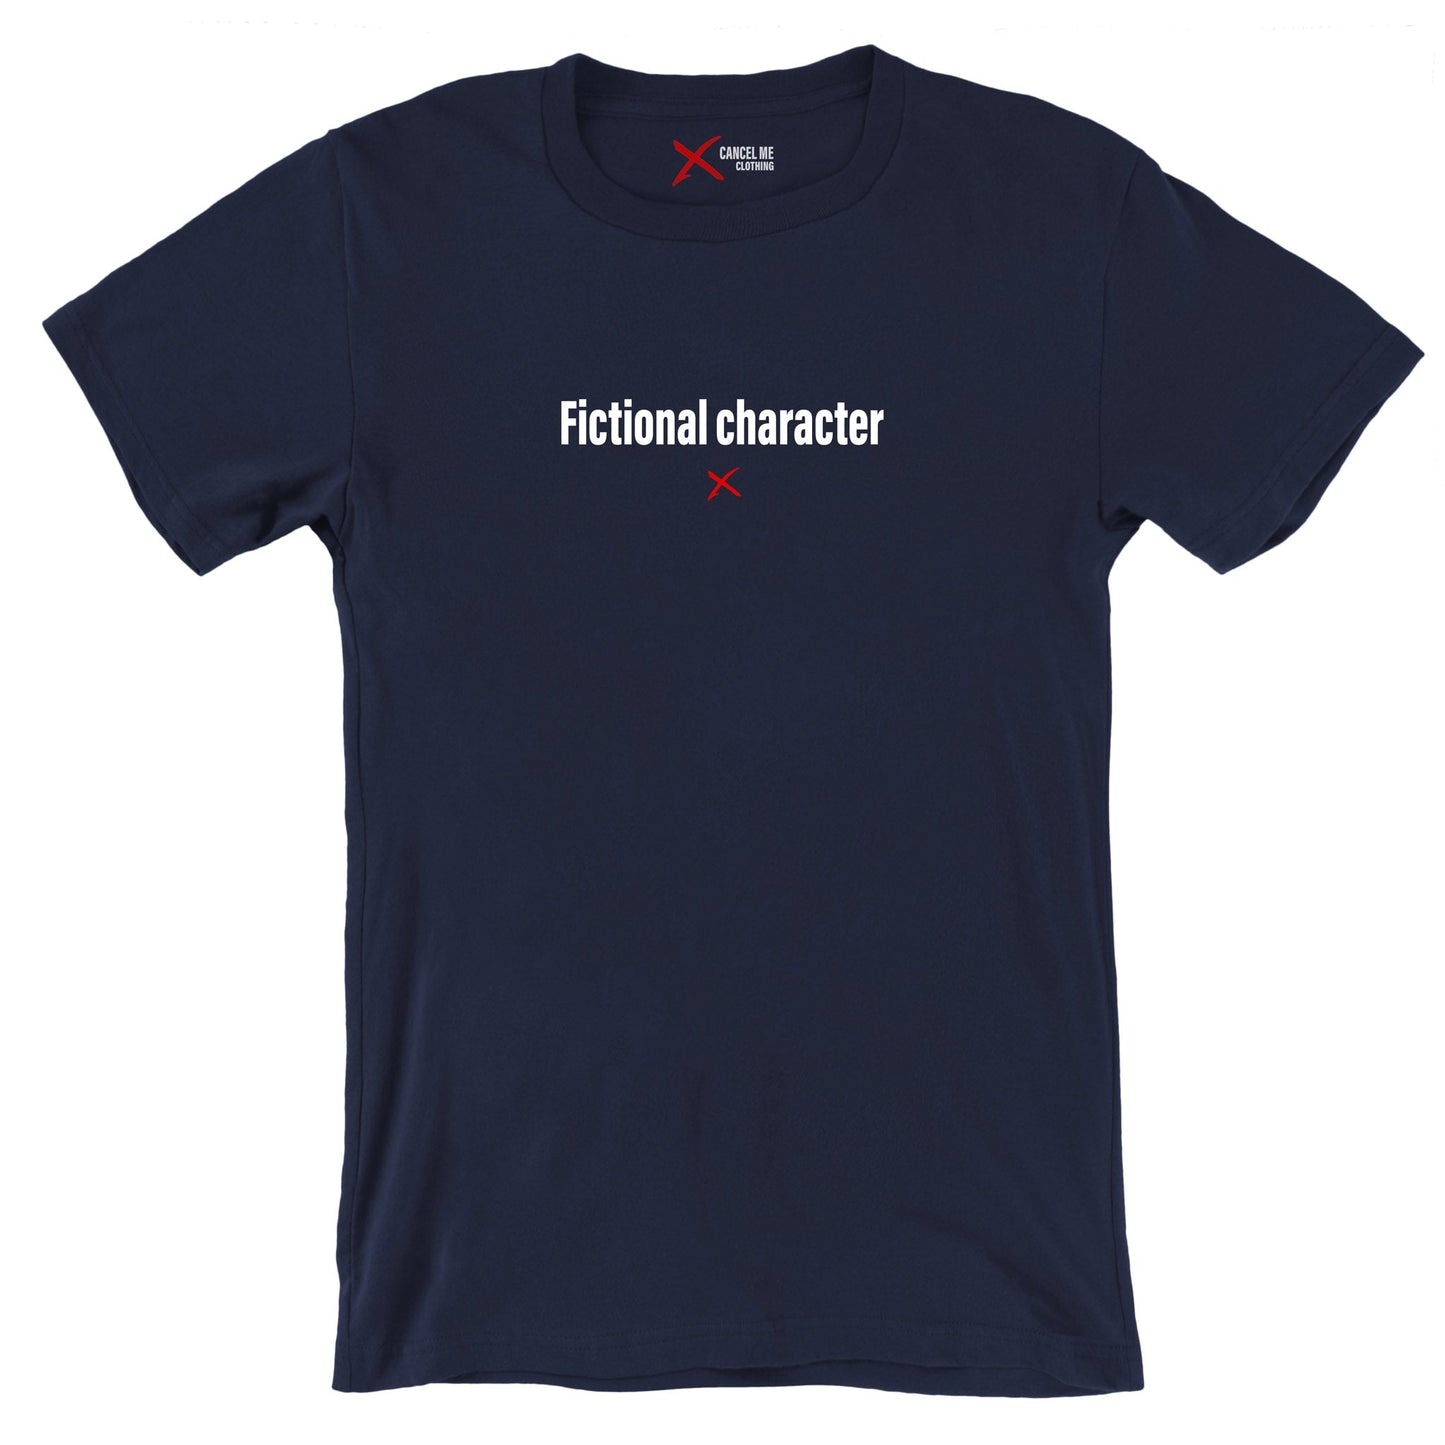 Fictional character - Shirt